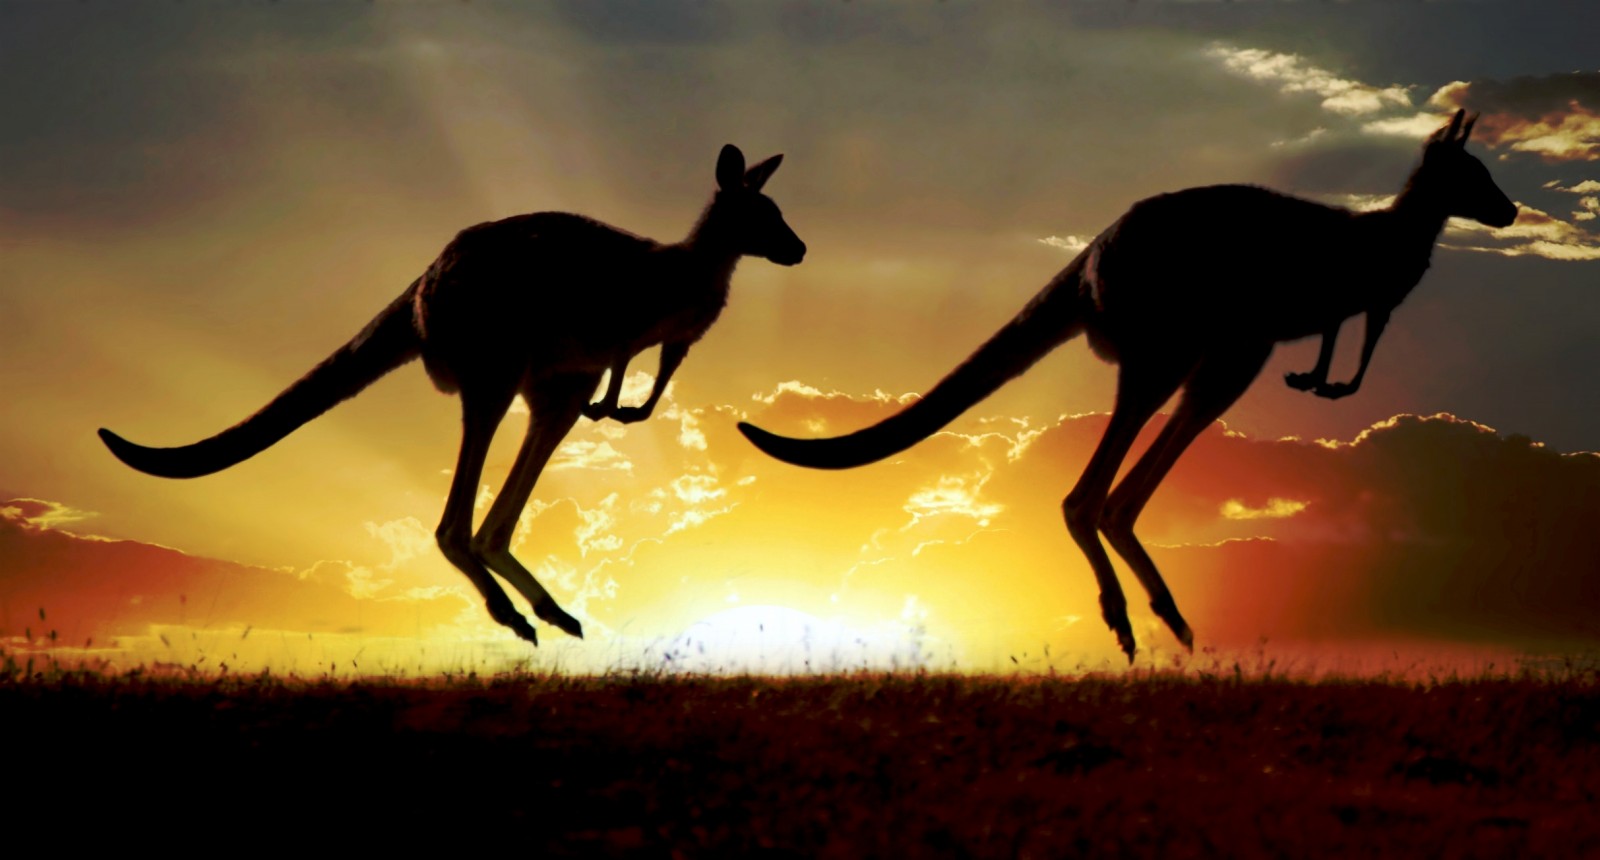 Kangaroos Image HD Wallpaper And Background Photos